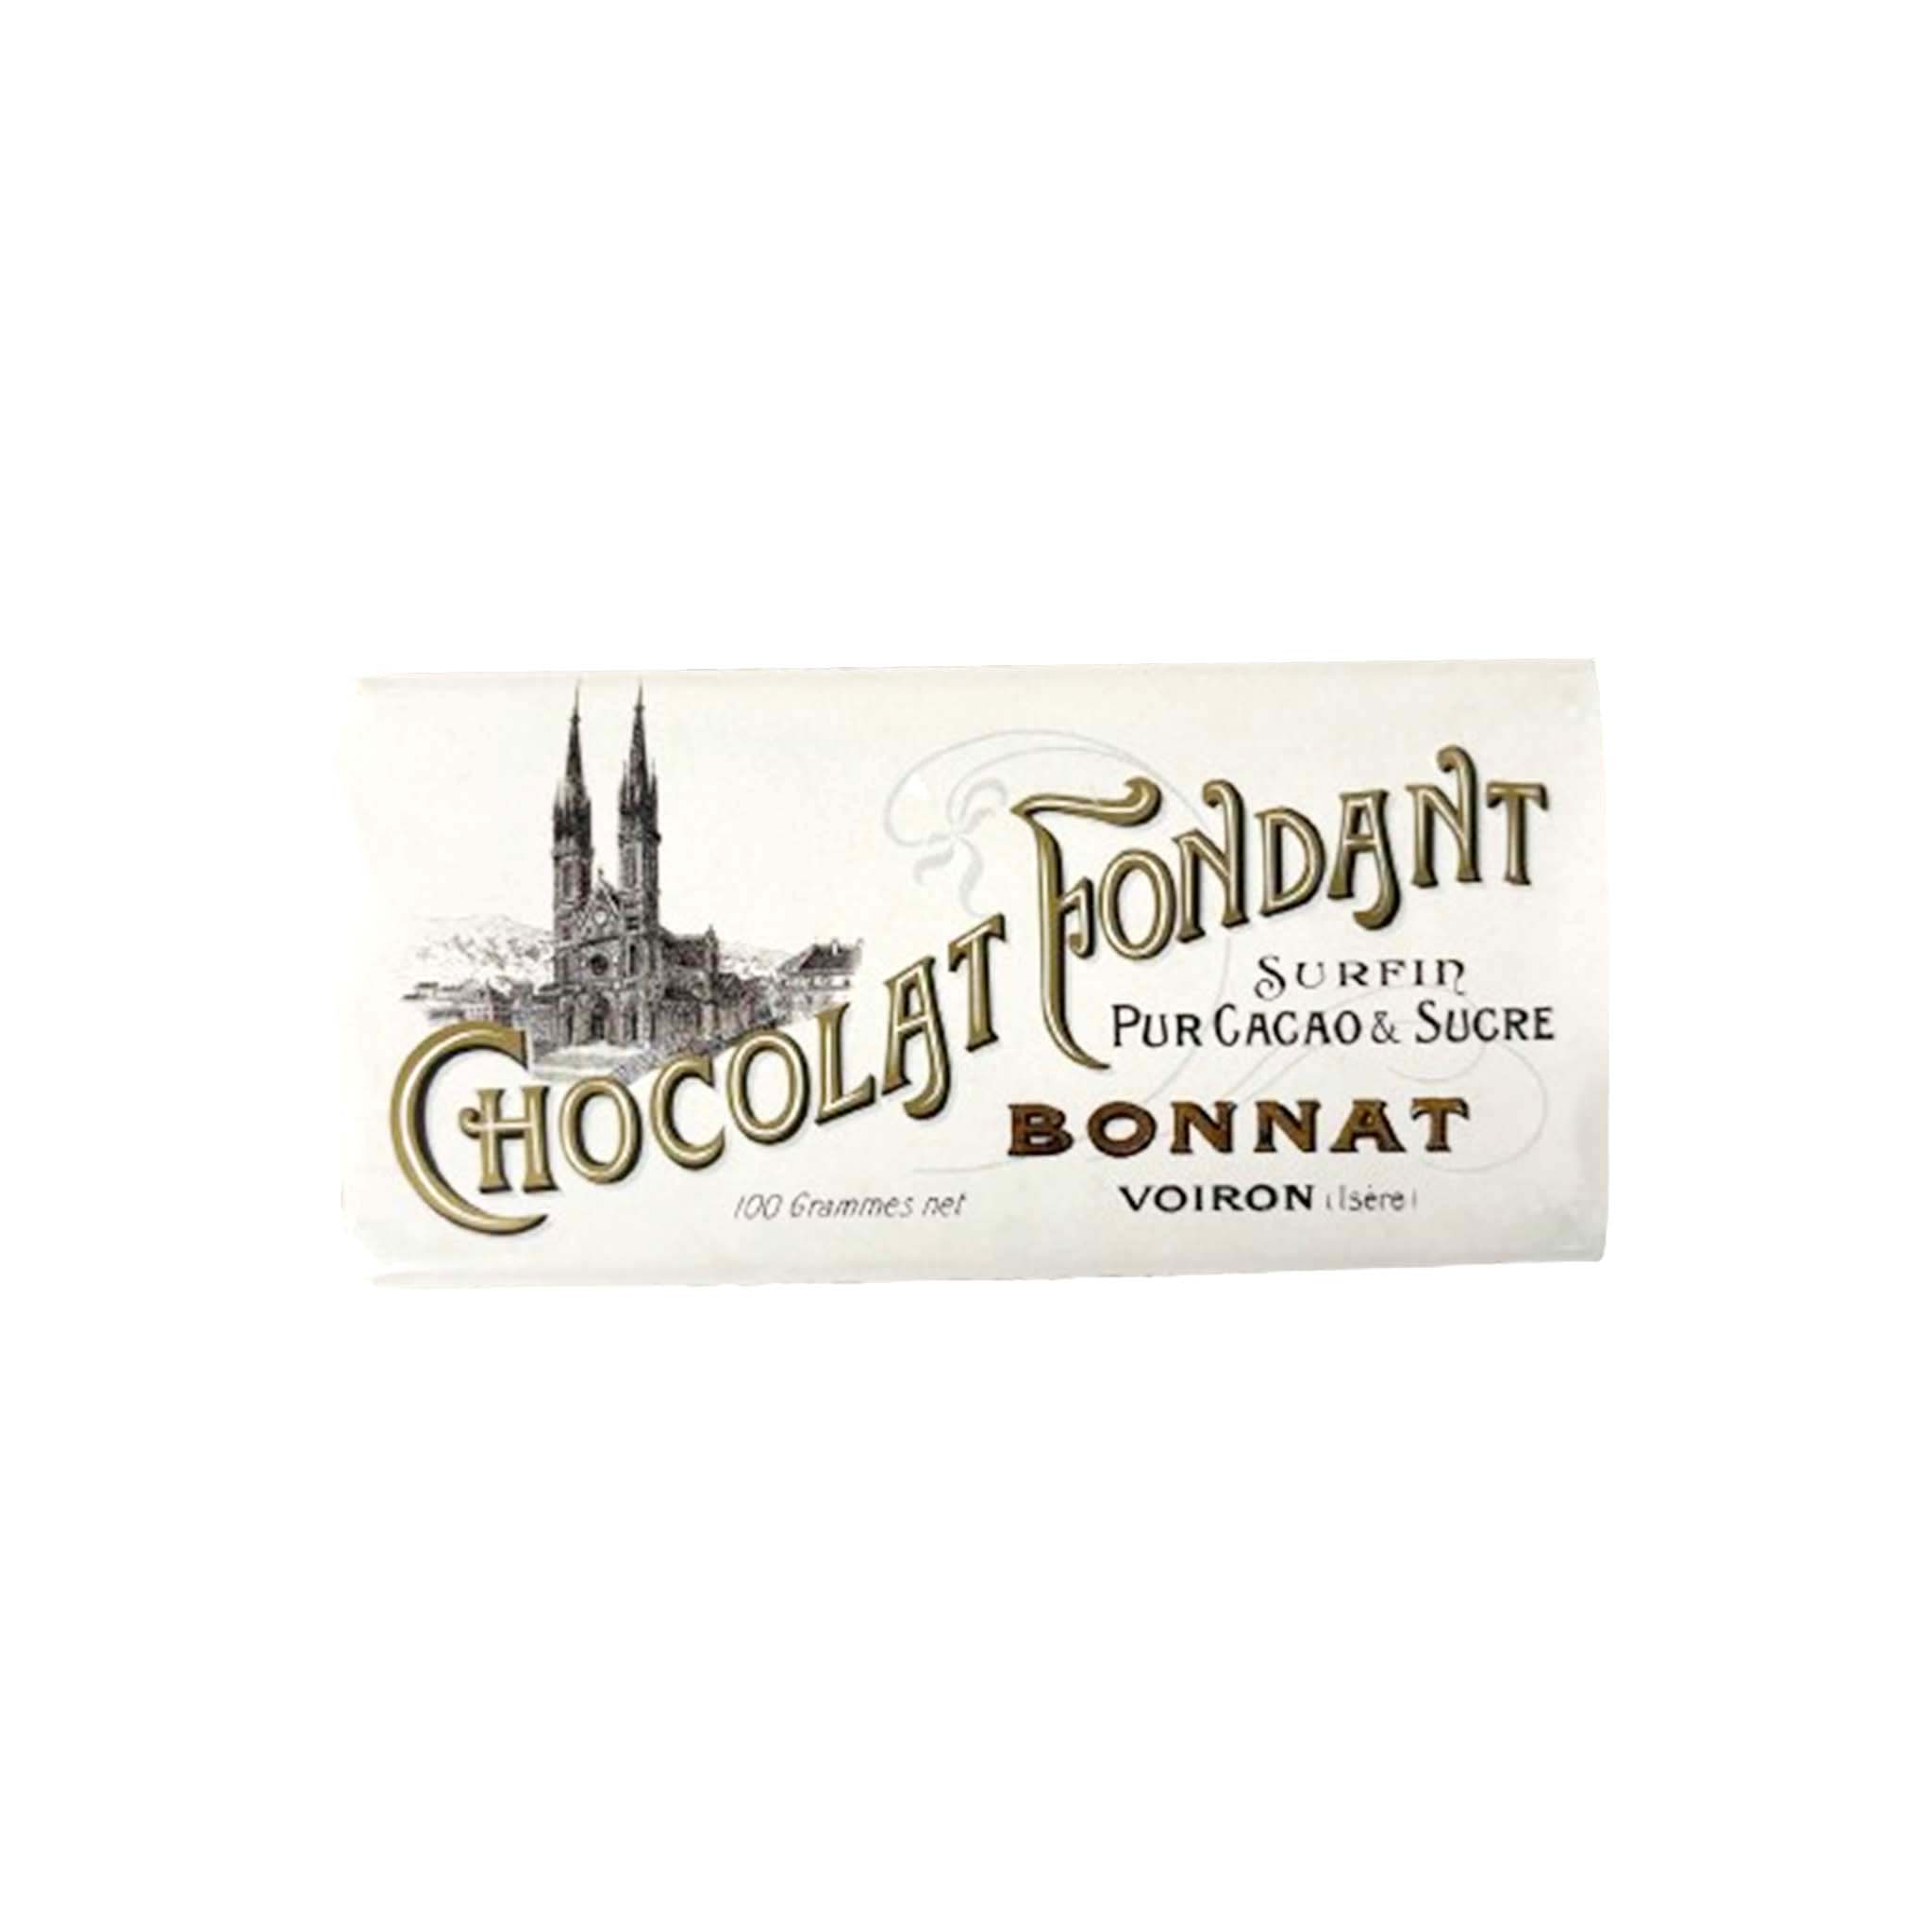 CHOCOLAT FONDANT BONNAT VOIRON 65% CHOCOLATE BAR 100G